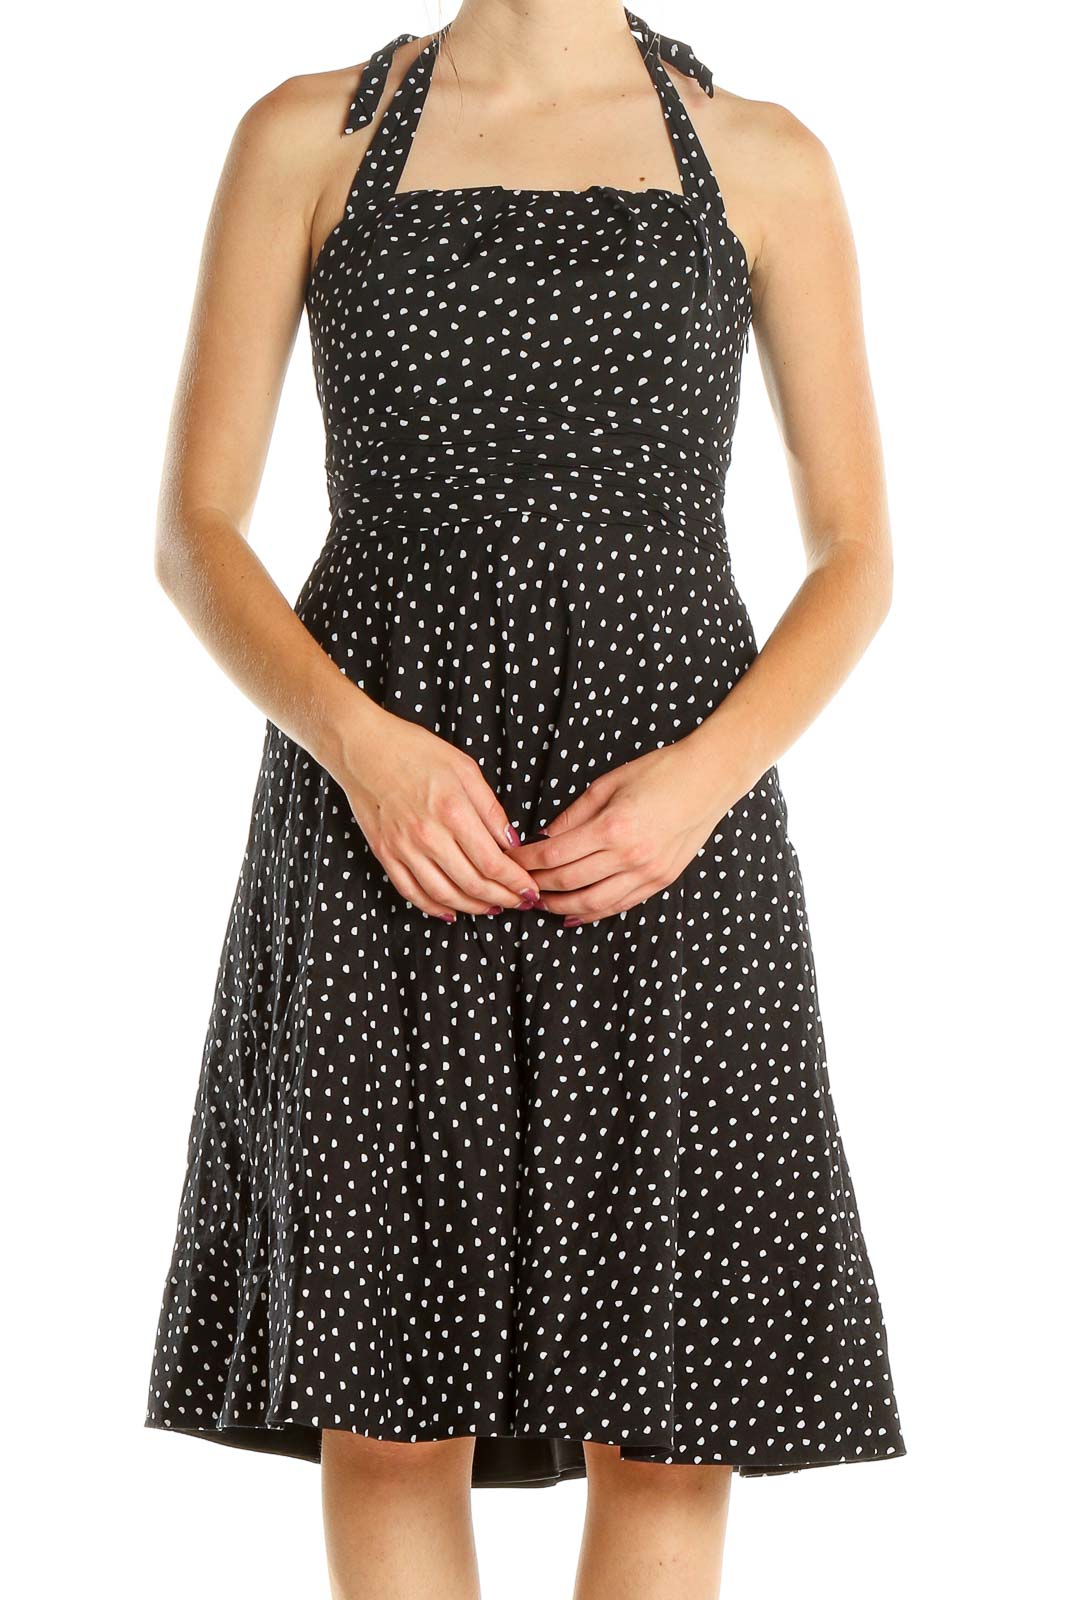 Black Polka Dot Retro Halter Fit & Flare Dress Front